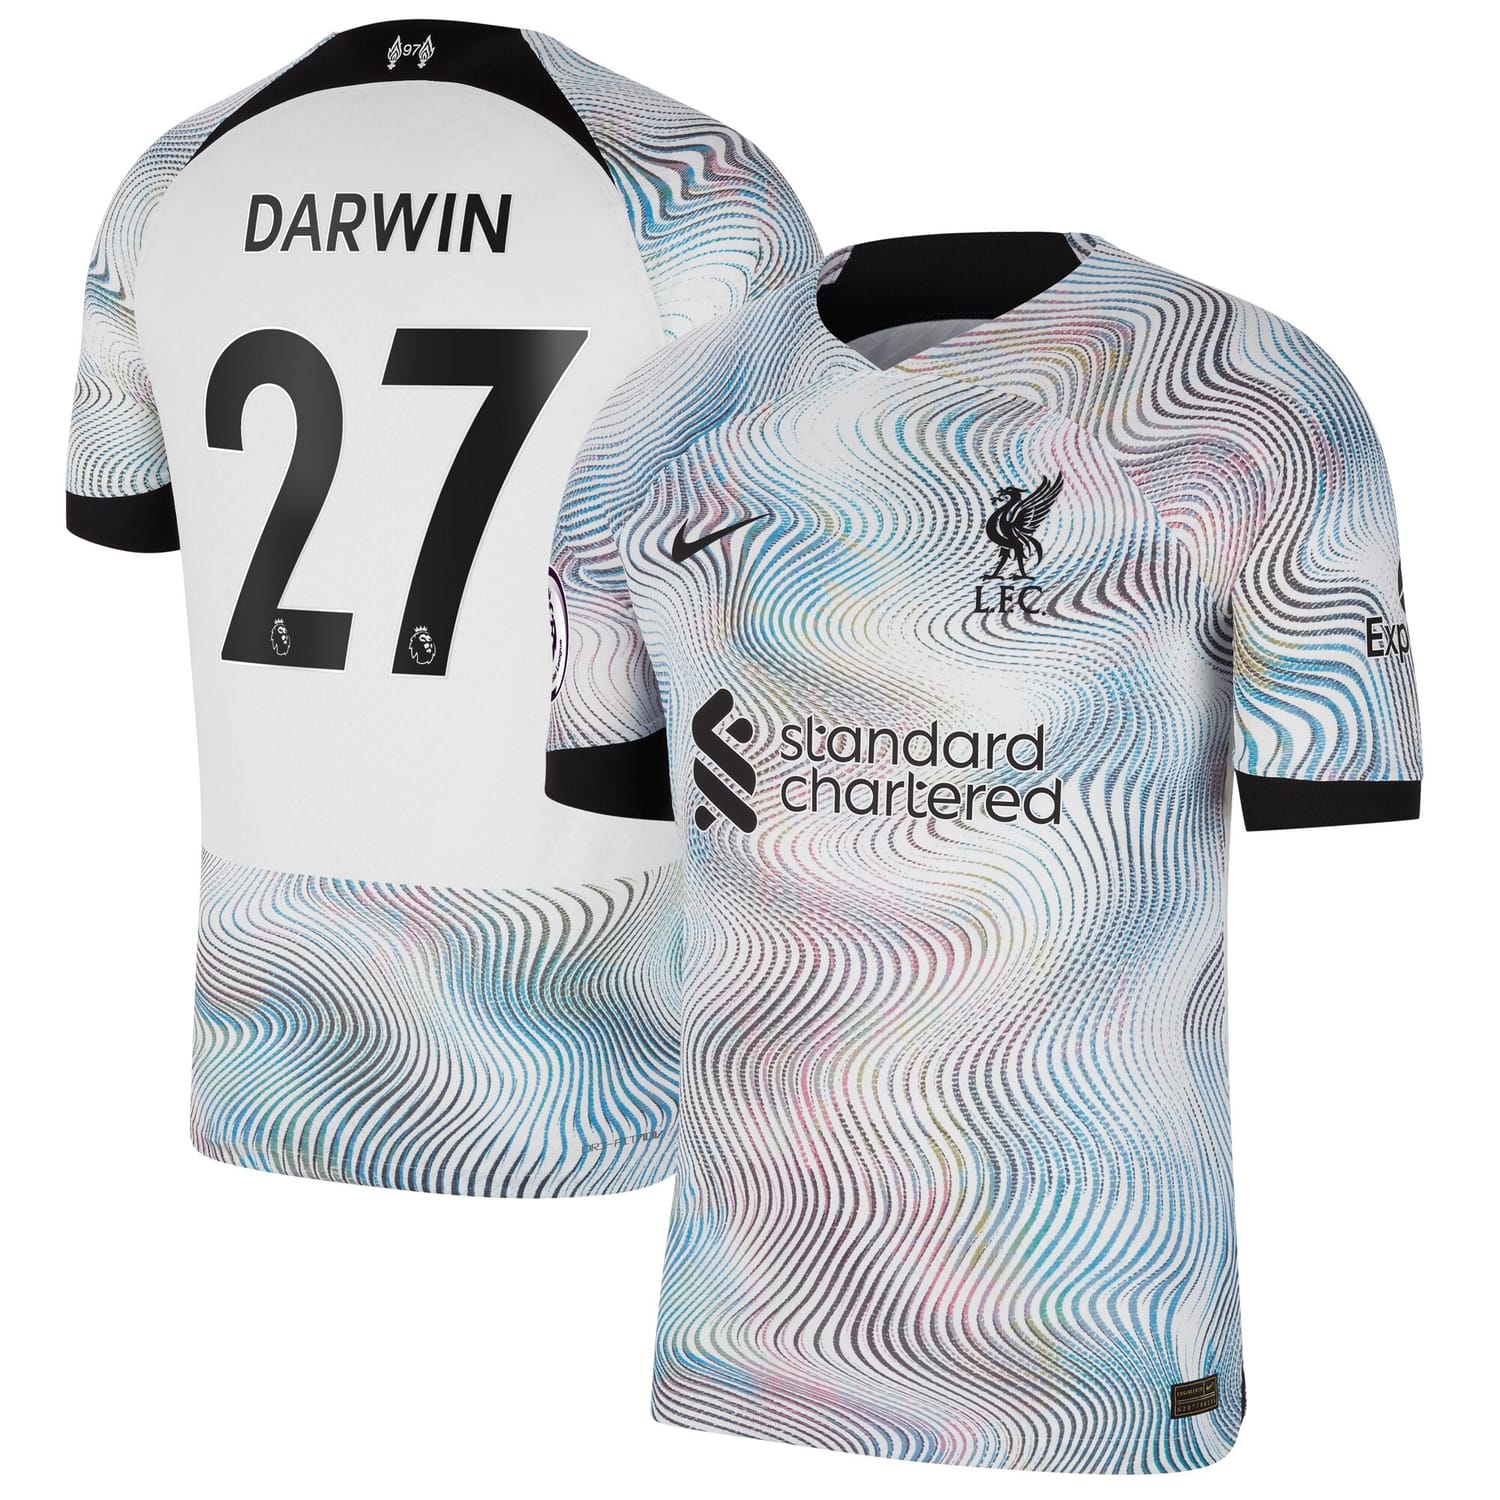 Premier League Liverpool Away Authentic Jersey Shirt White 2022-23 player Darwin Núñez printing for Men